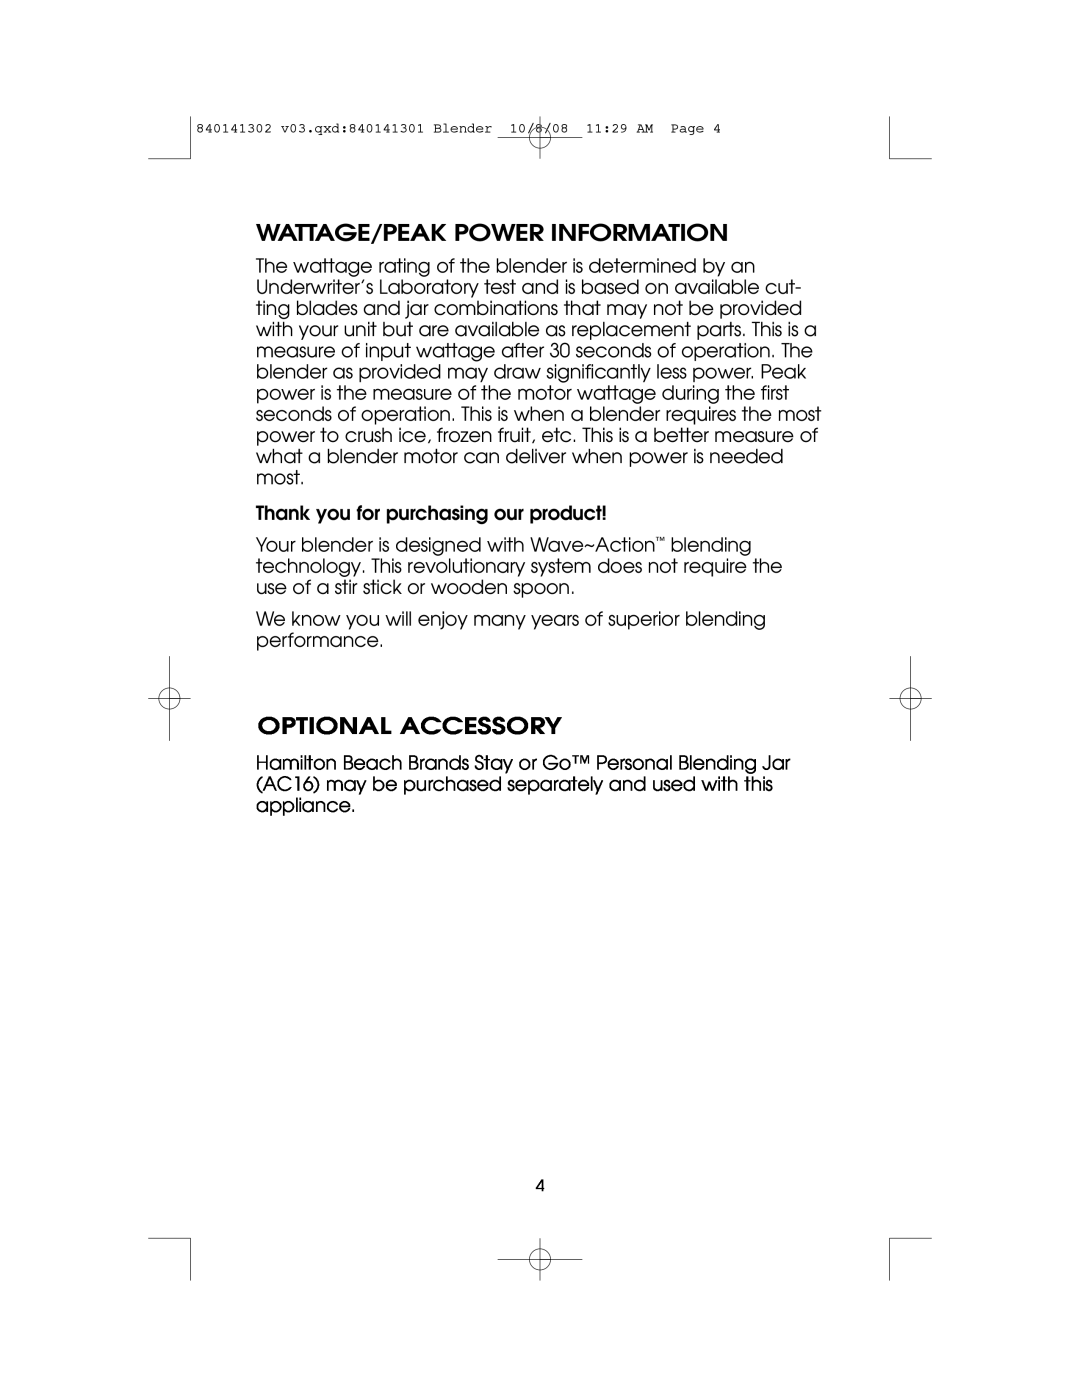 Hamilton Beach 840141302 owner manual Wattage/Peak Power Information, Optional Accessory 